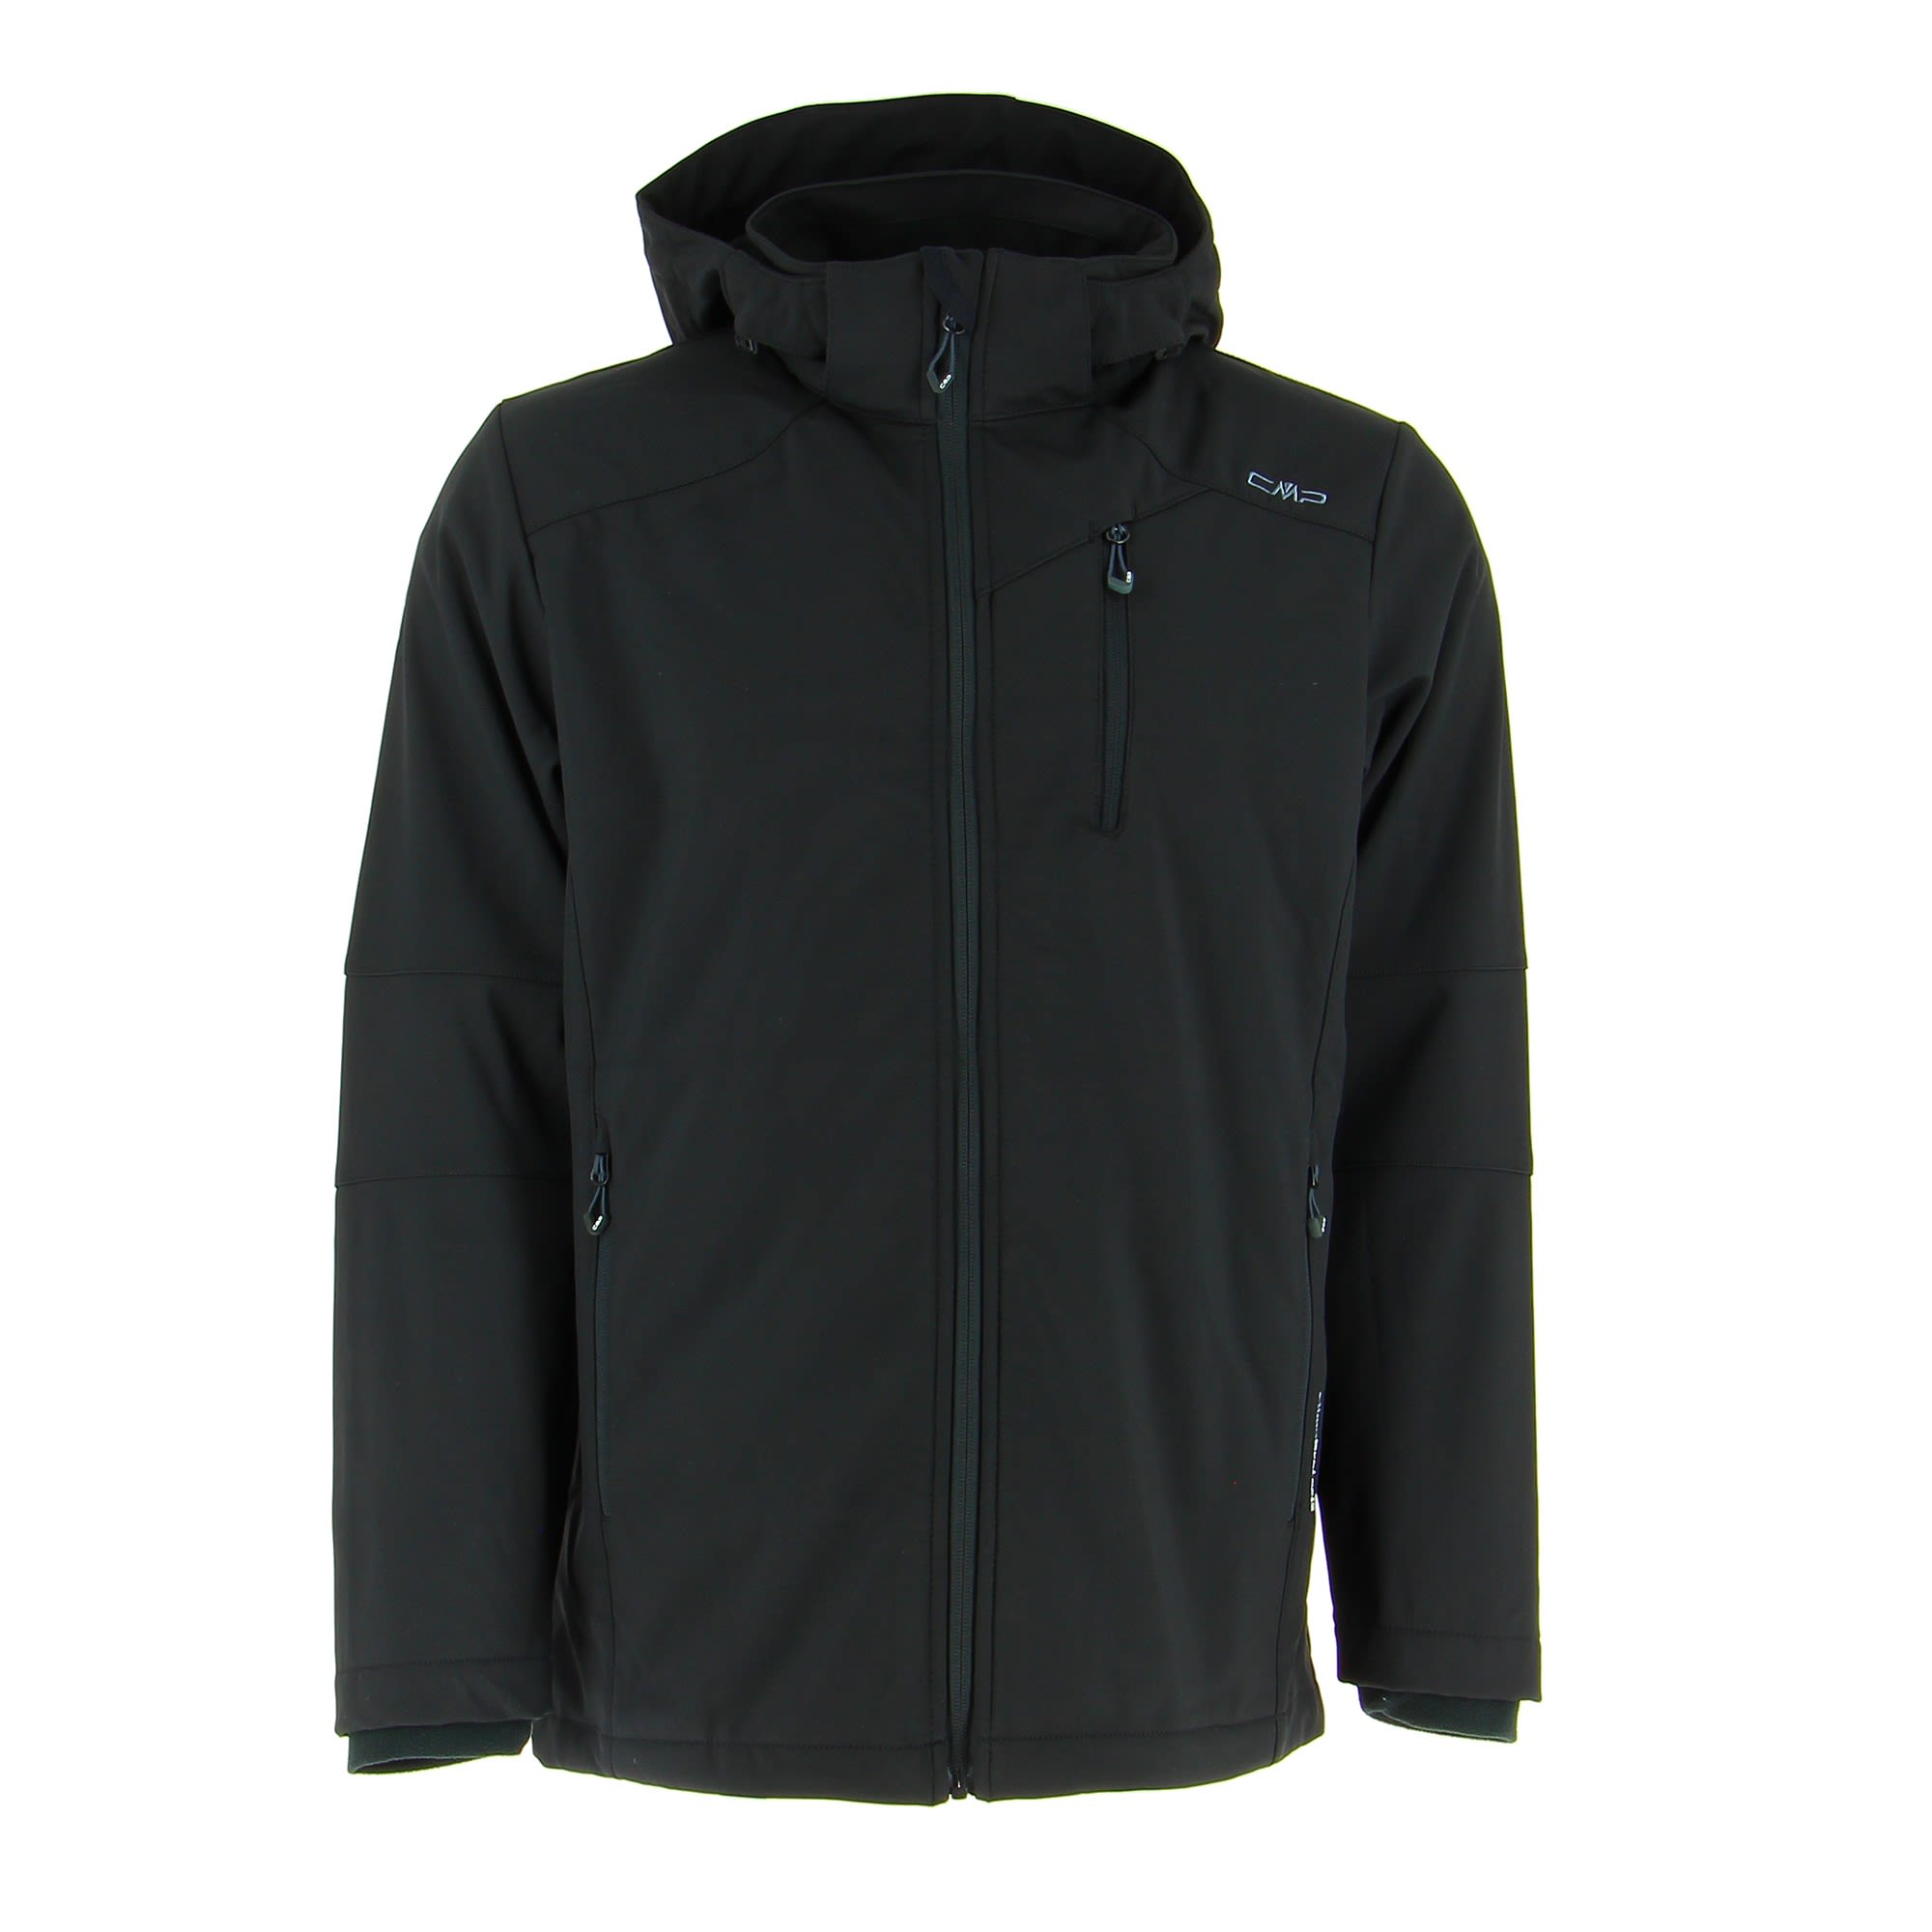 CMP Jacket Zip Hood Softshell Comfort FIt Long Male Softshelljacken- Grsse 50 - Farbe Nero unter CMP